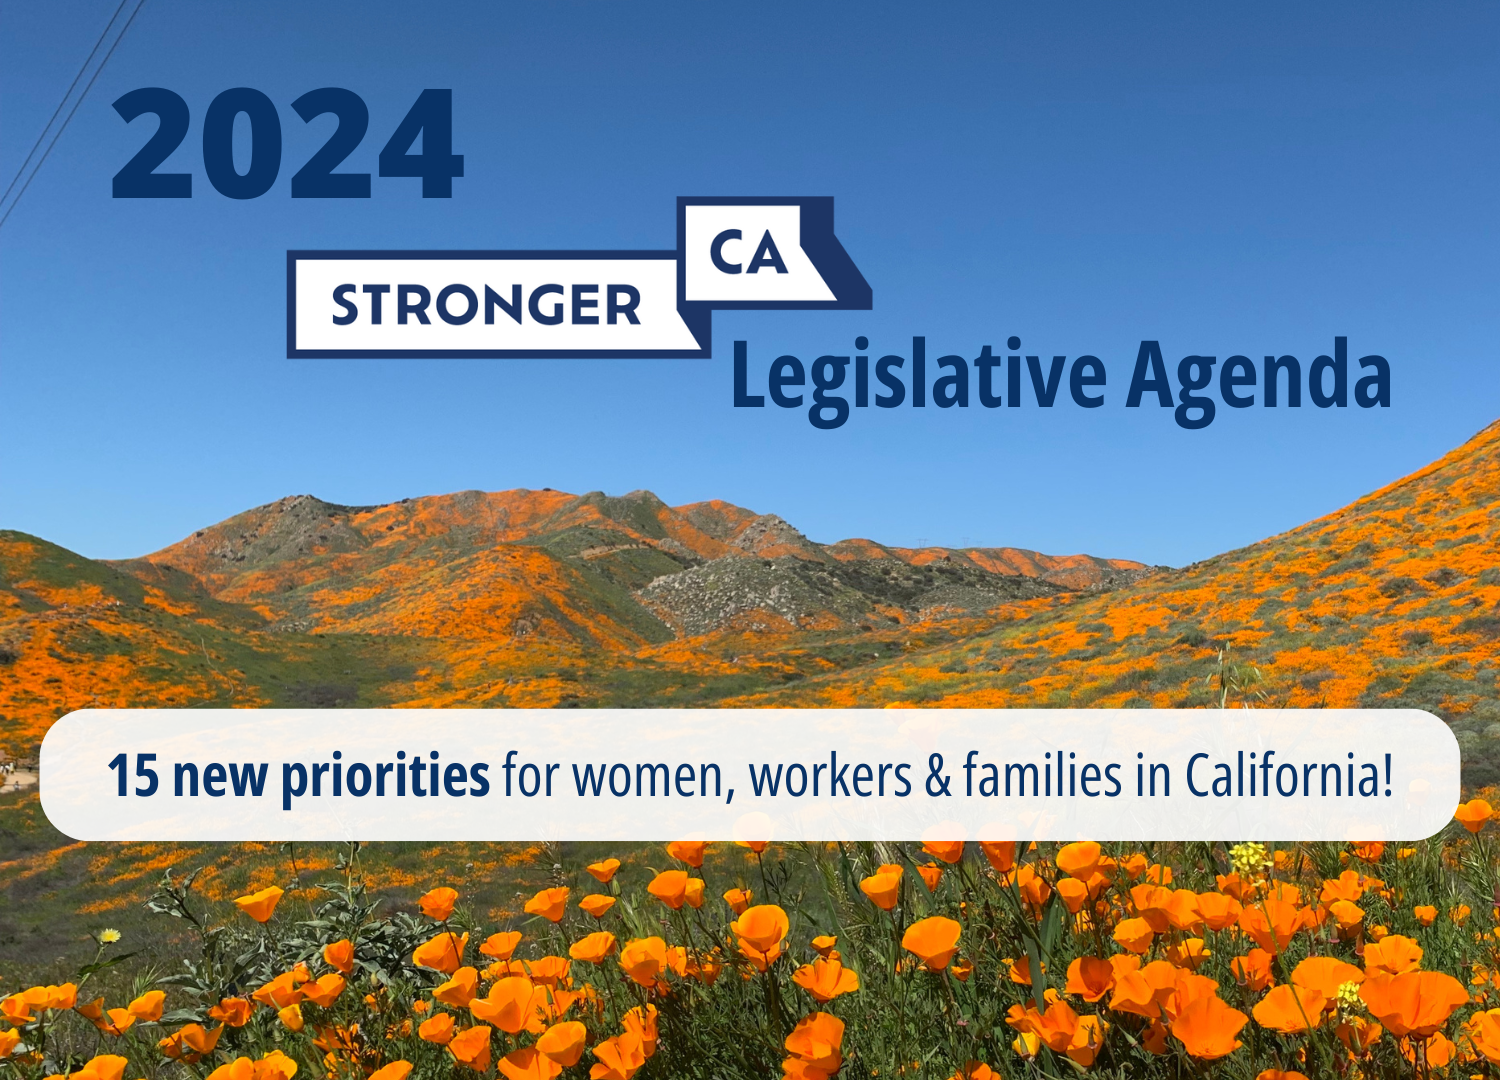 2024 Stronger CA Legislative Agenda - 15 new priorities for women, workers & families in California!